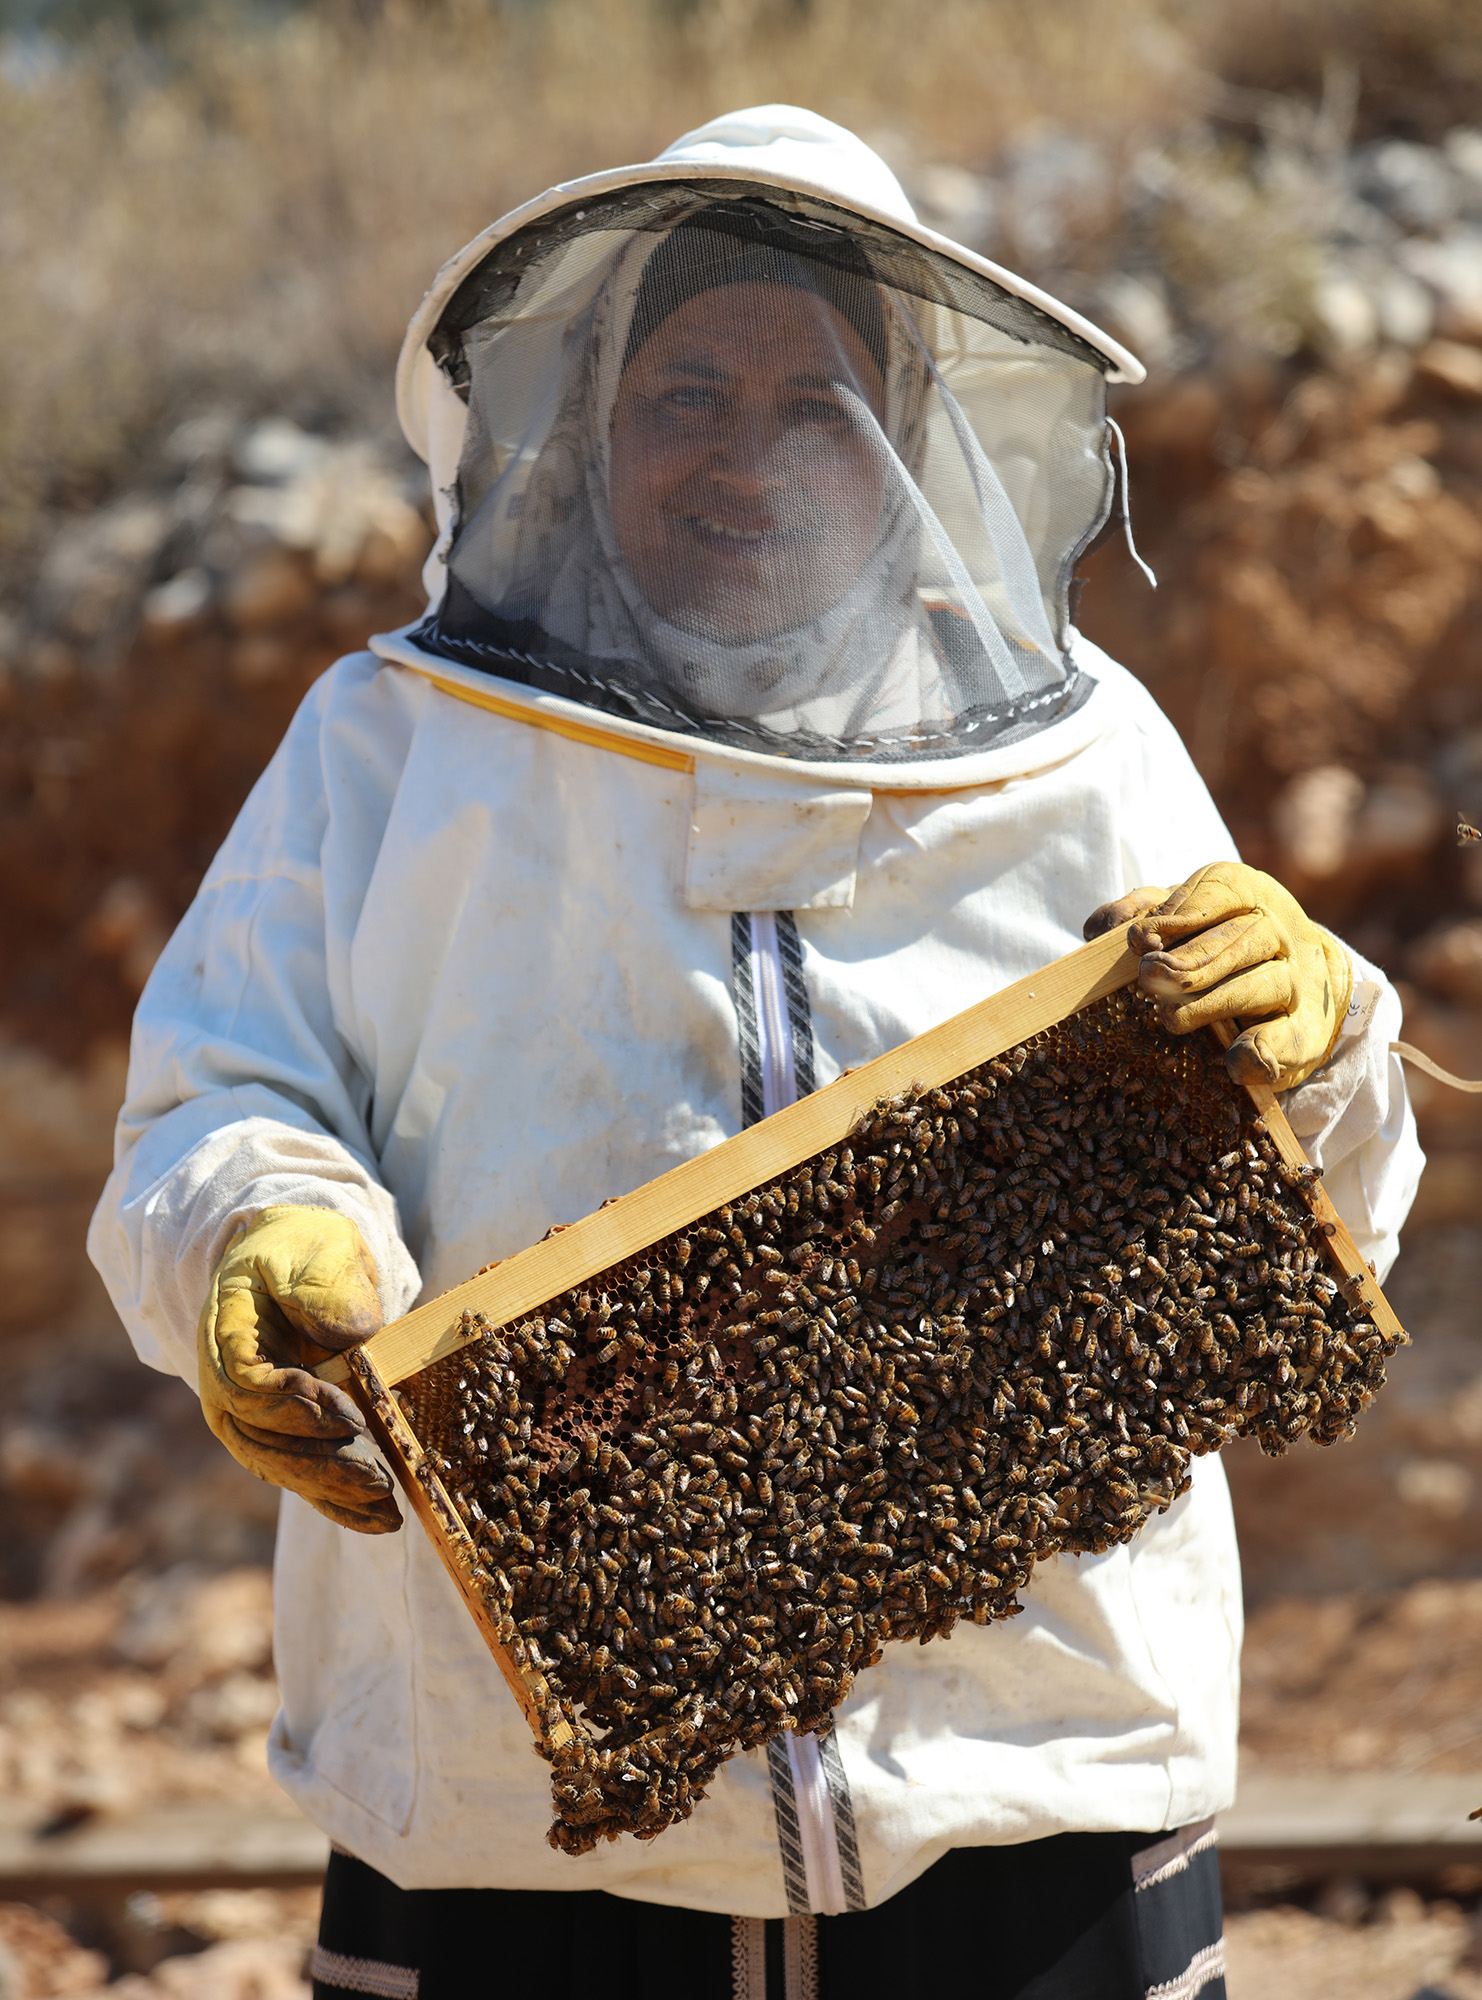 A proud beekeeper!